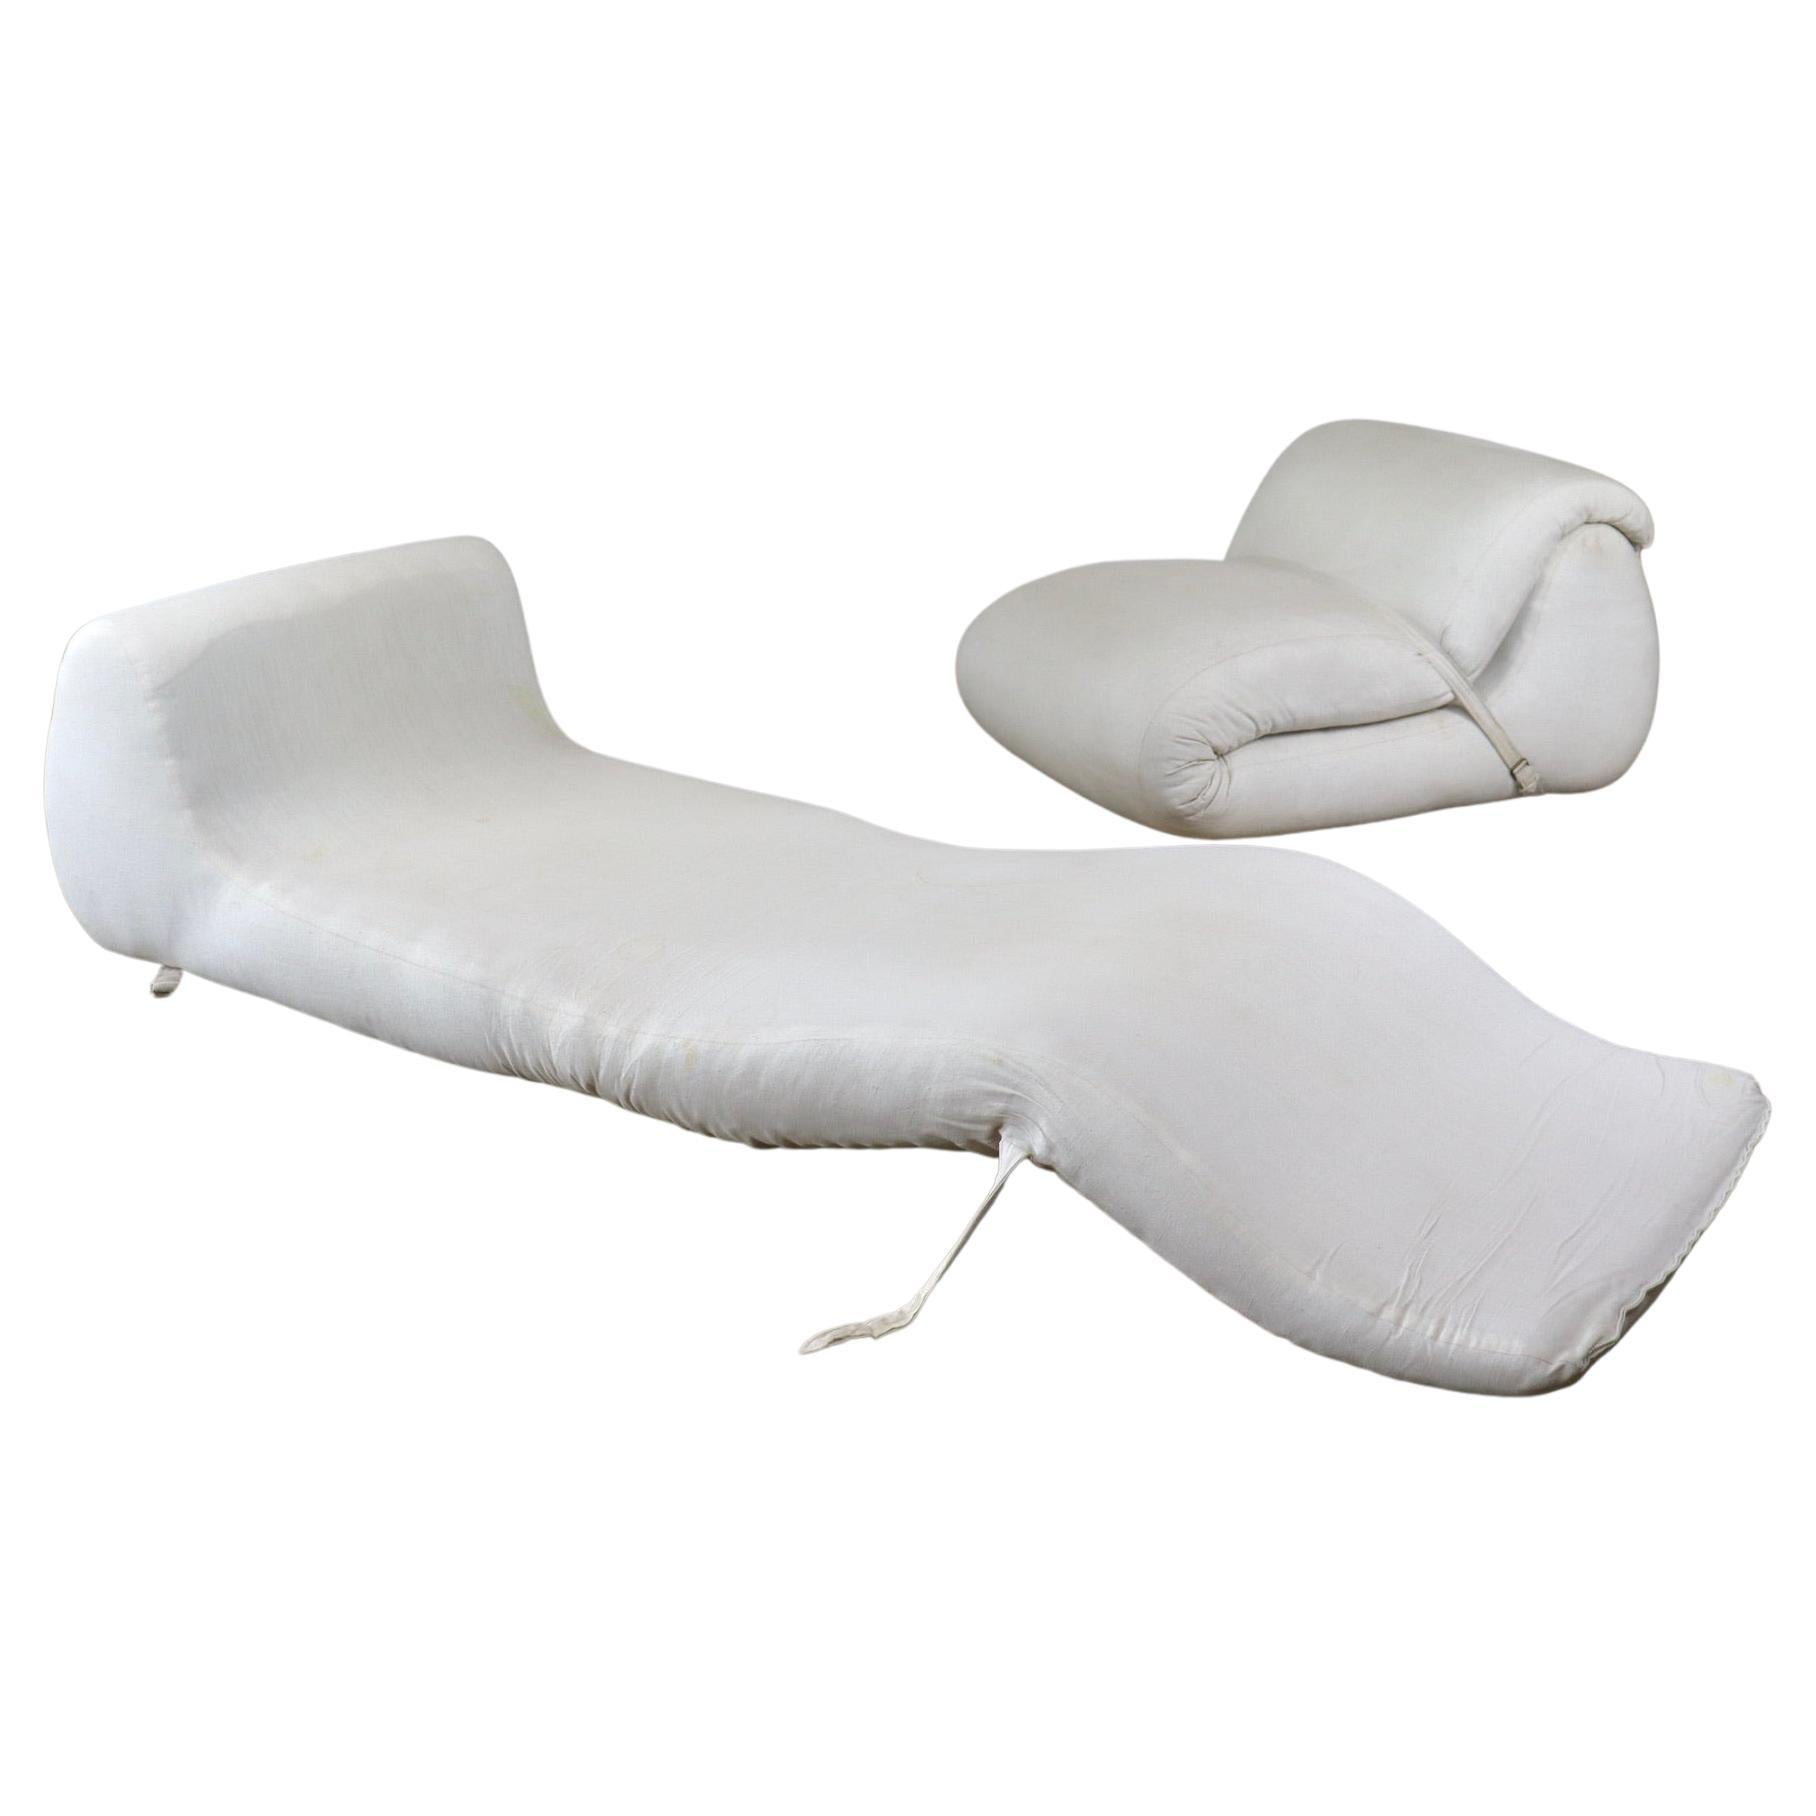 Pair of Ghiro Convertible lounge chairs by Umberto Catalano and Gianfranco Masi,